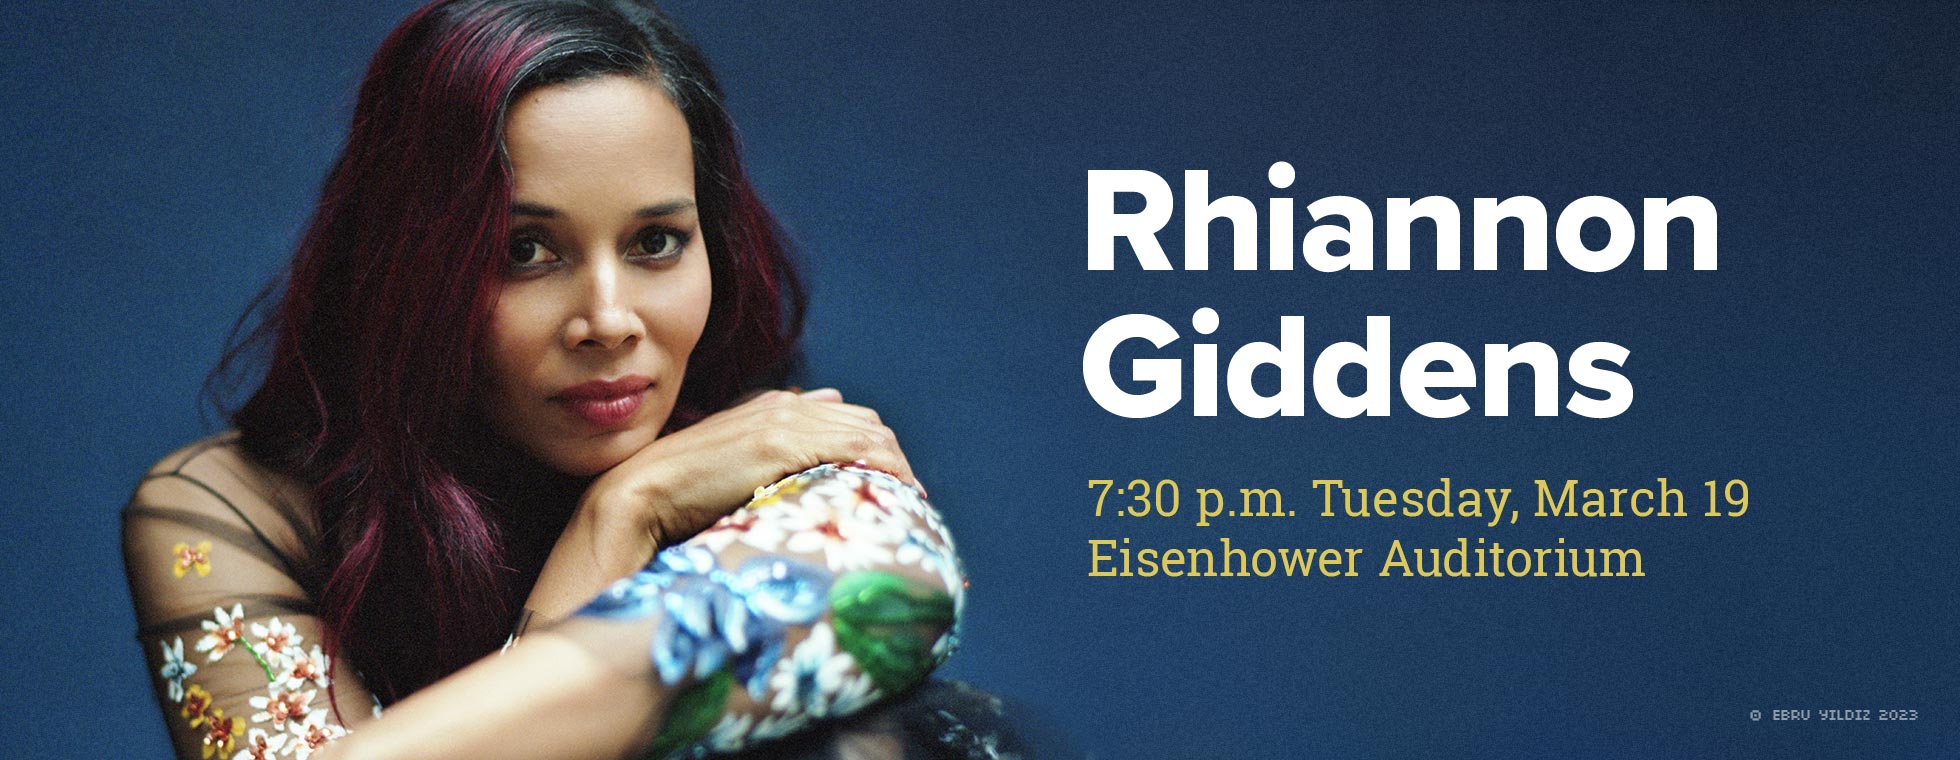 Rhiannon Giddens. 7:30 p.m. Tuesday, March 19 in Eisenhower Auditorium.